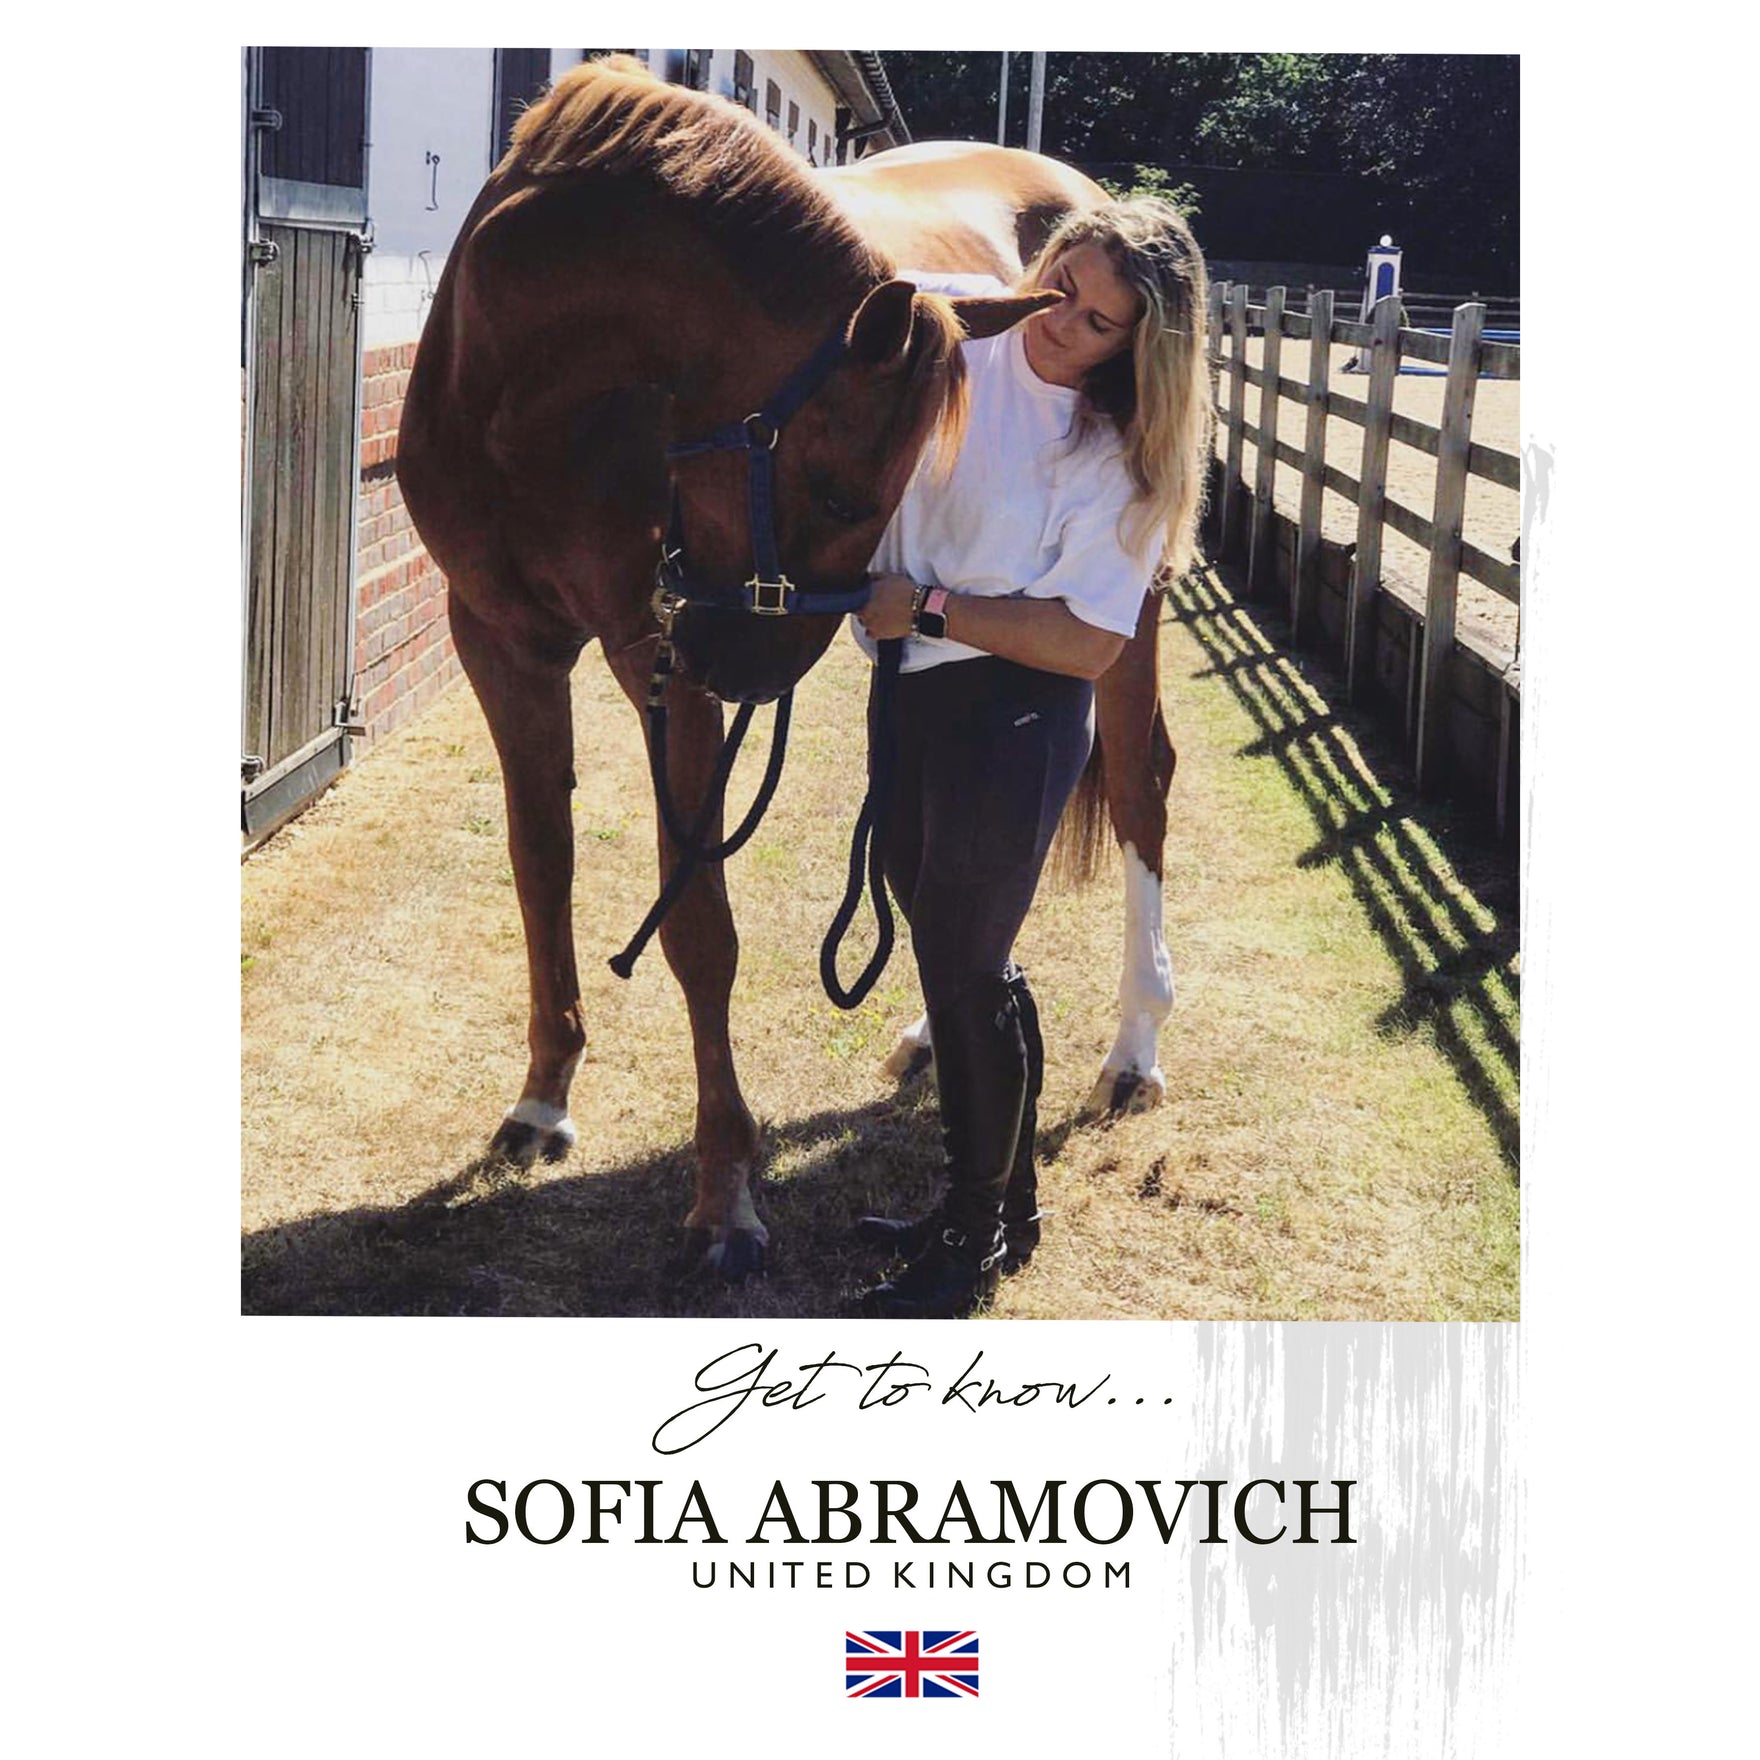 Get to know... Sofia Abramovich